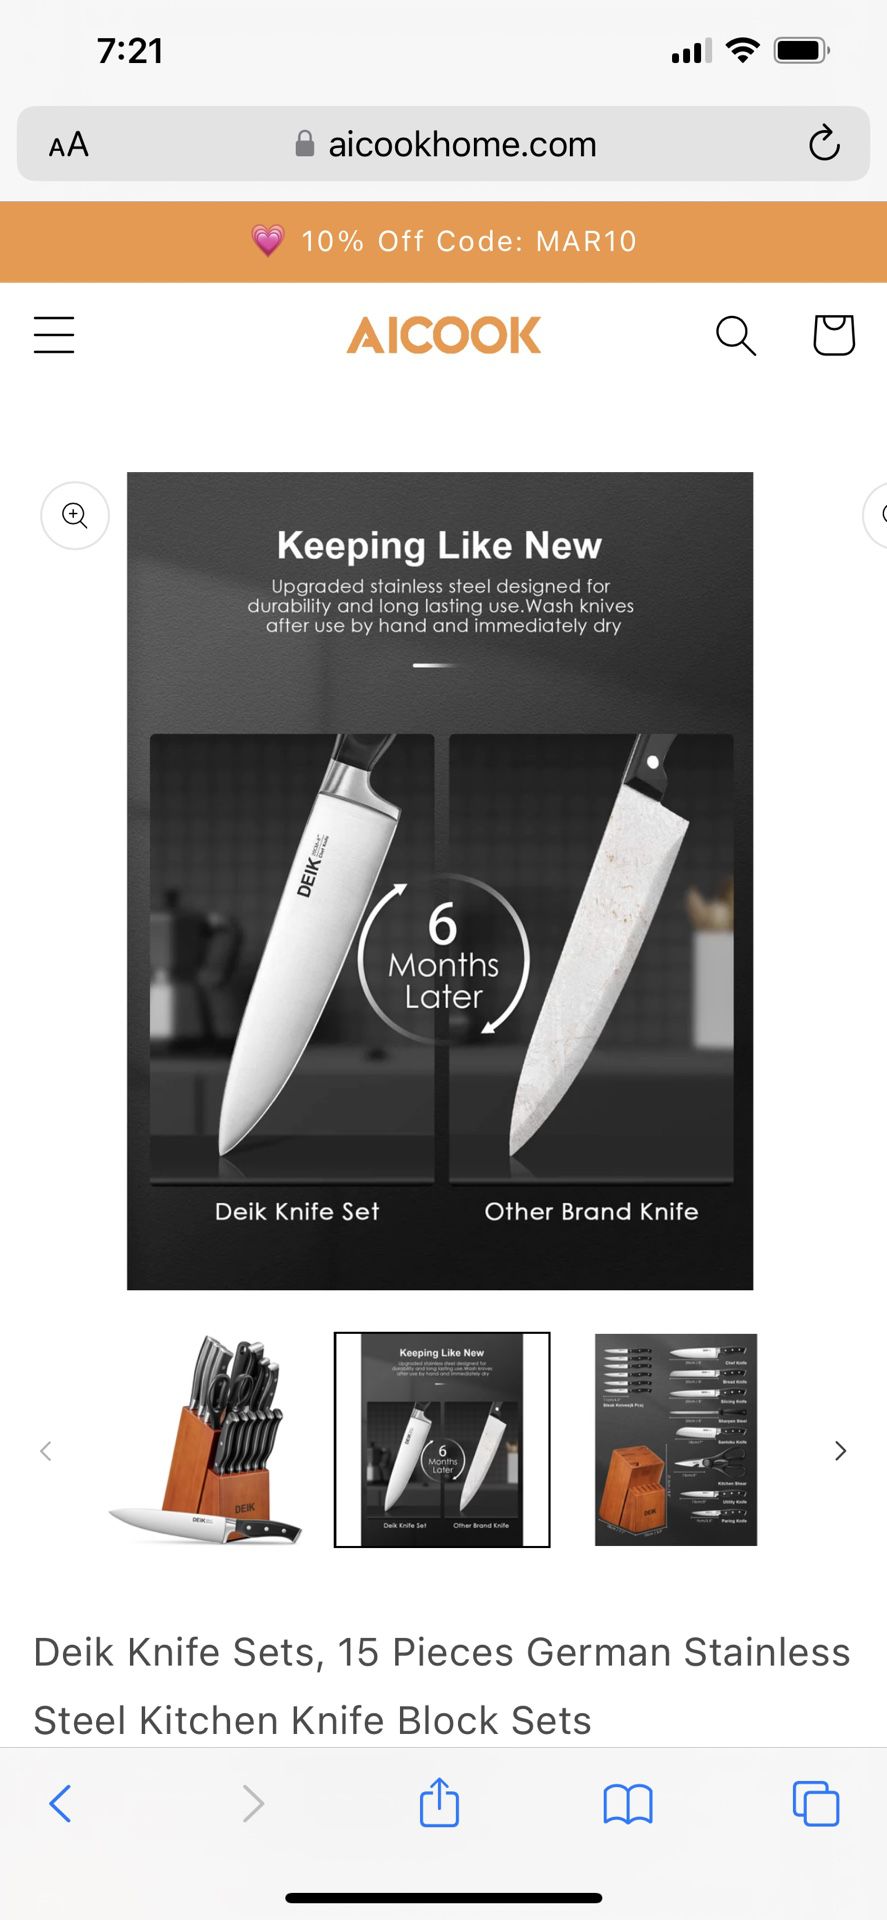 Deik Knife Sets, 15 Pieces German Stainless Steel Kitchen Knife Block Sets  for Sale in Altadena, CA - OfferUp